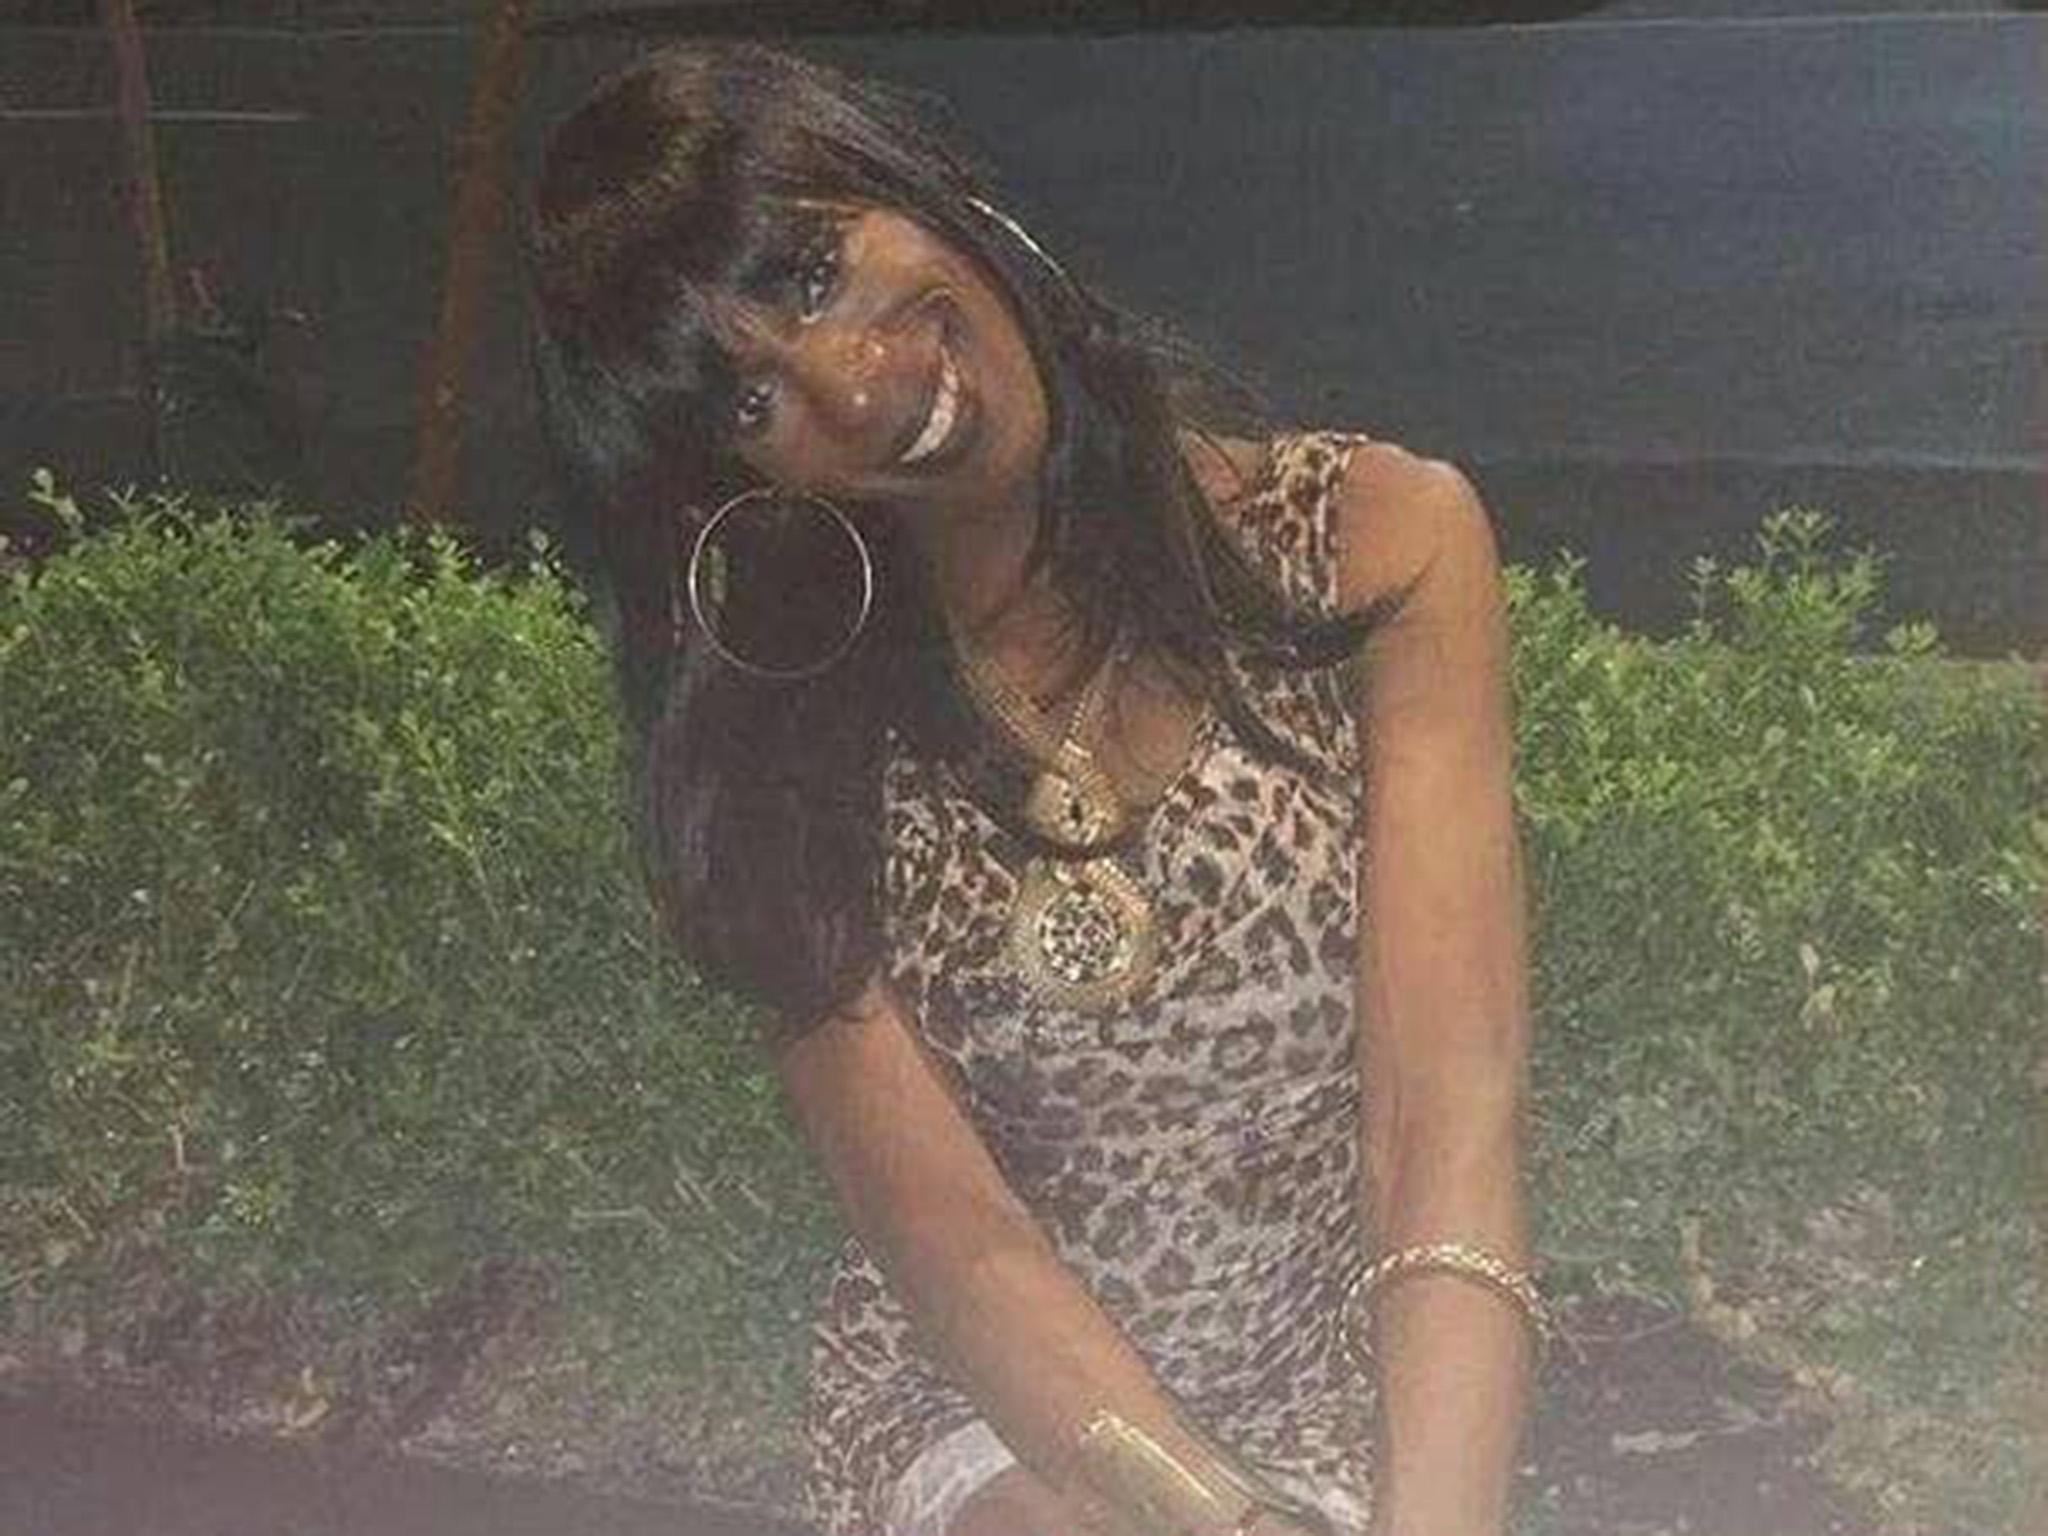 Monika Diamond: Young transgender activist shot dead in North Carolina